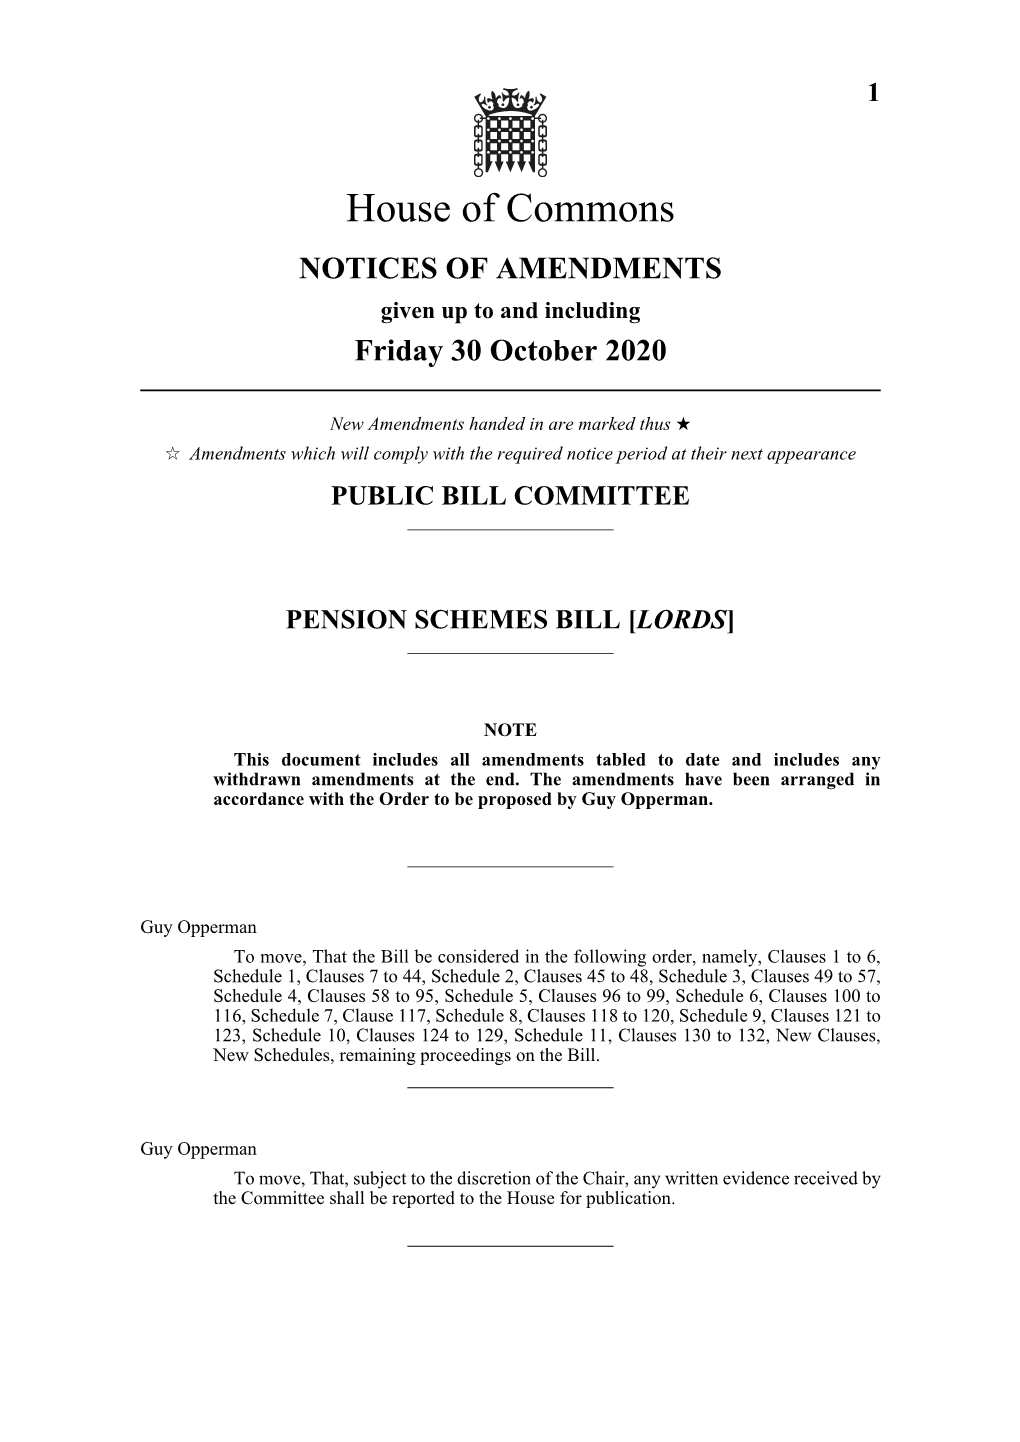 Public Bill Committee Pension Schemes Bill